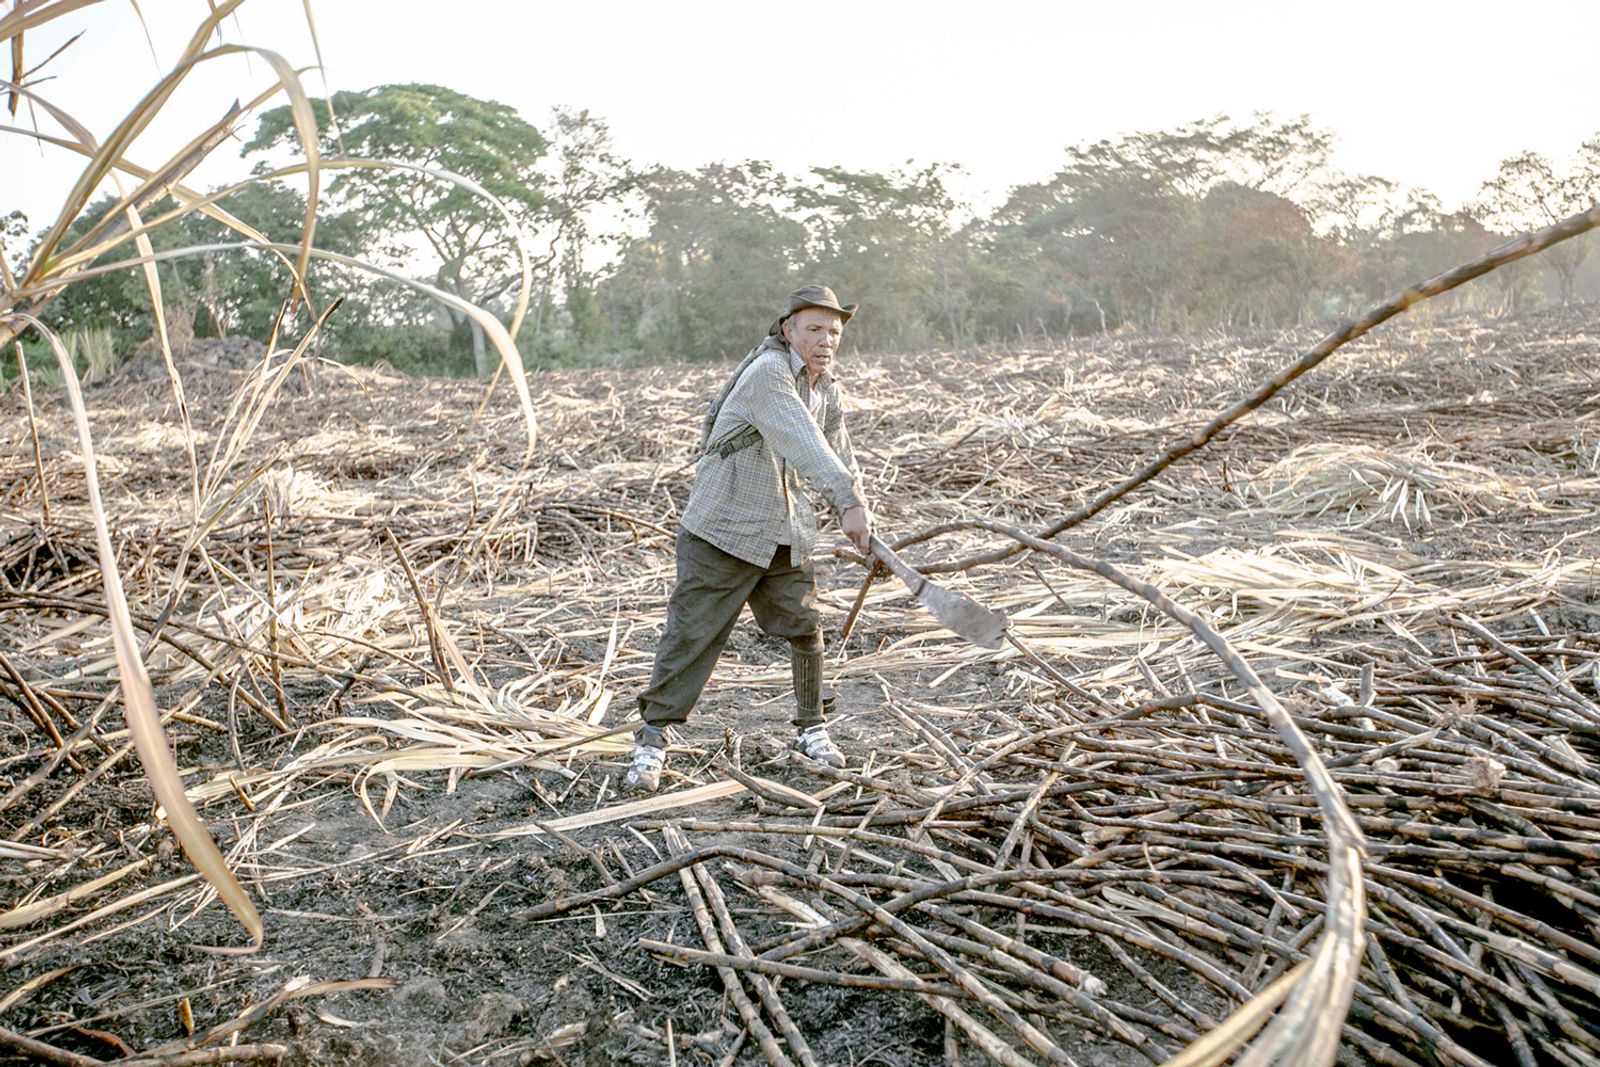 © Fred Ramos - Cutting sugarcane in Aguilares, El Salvador, March 2015. Fred Ramos